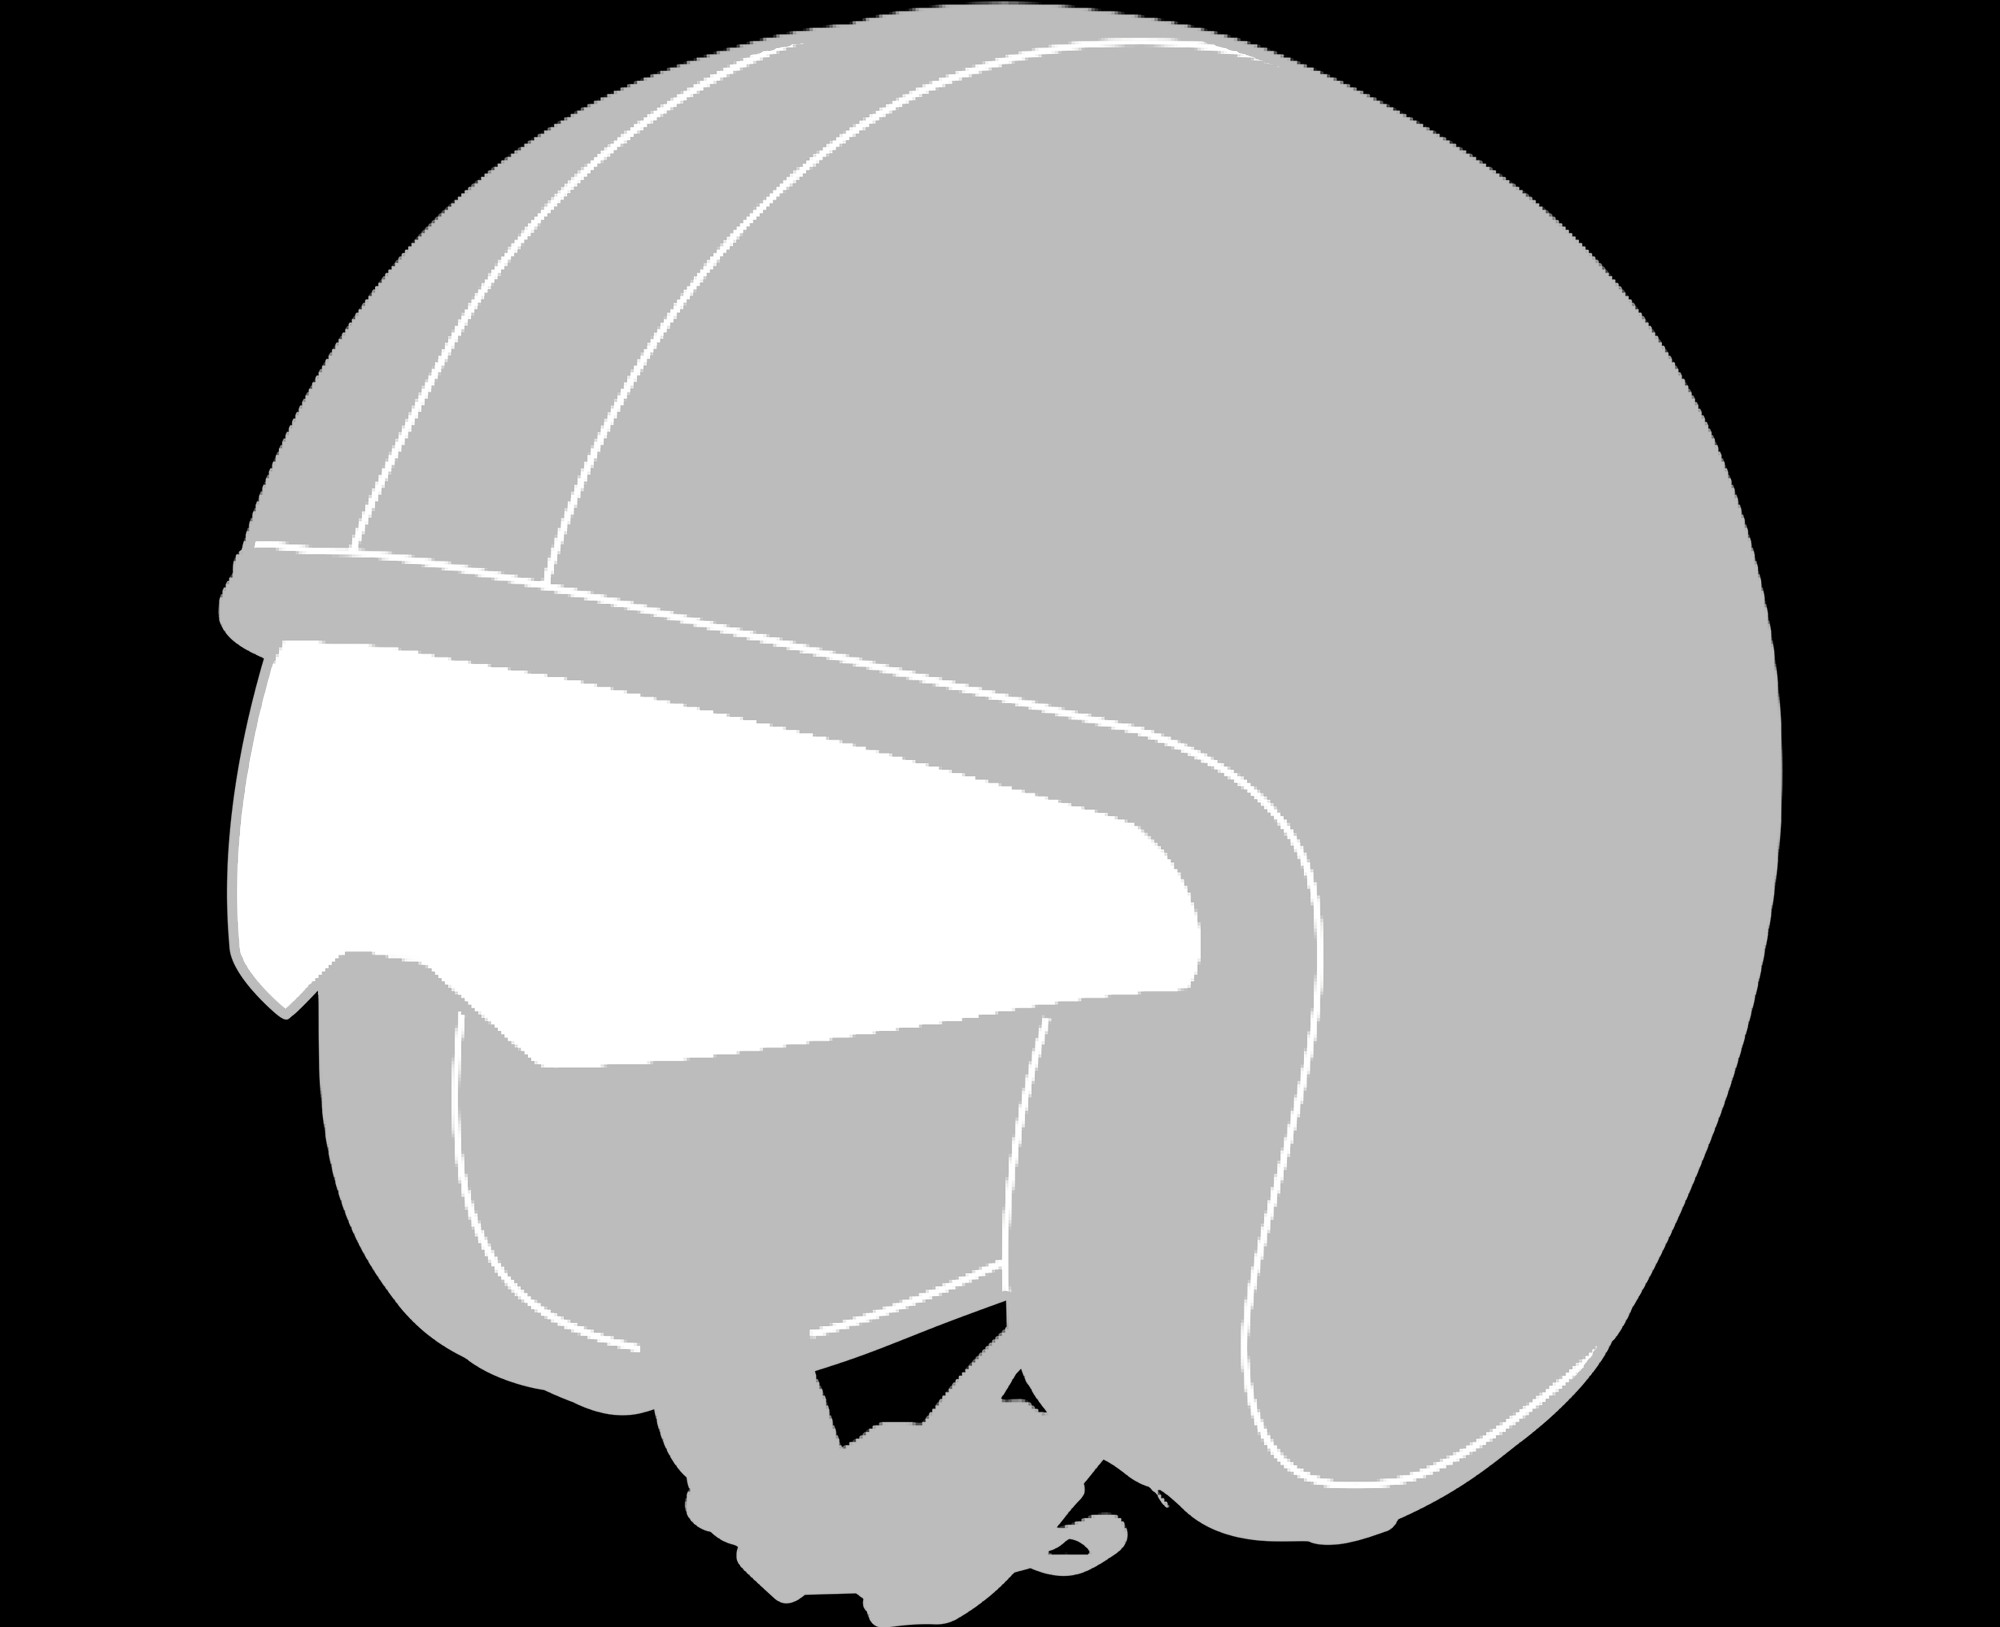 Jet-police helmet